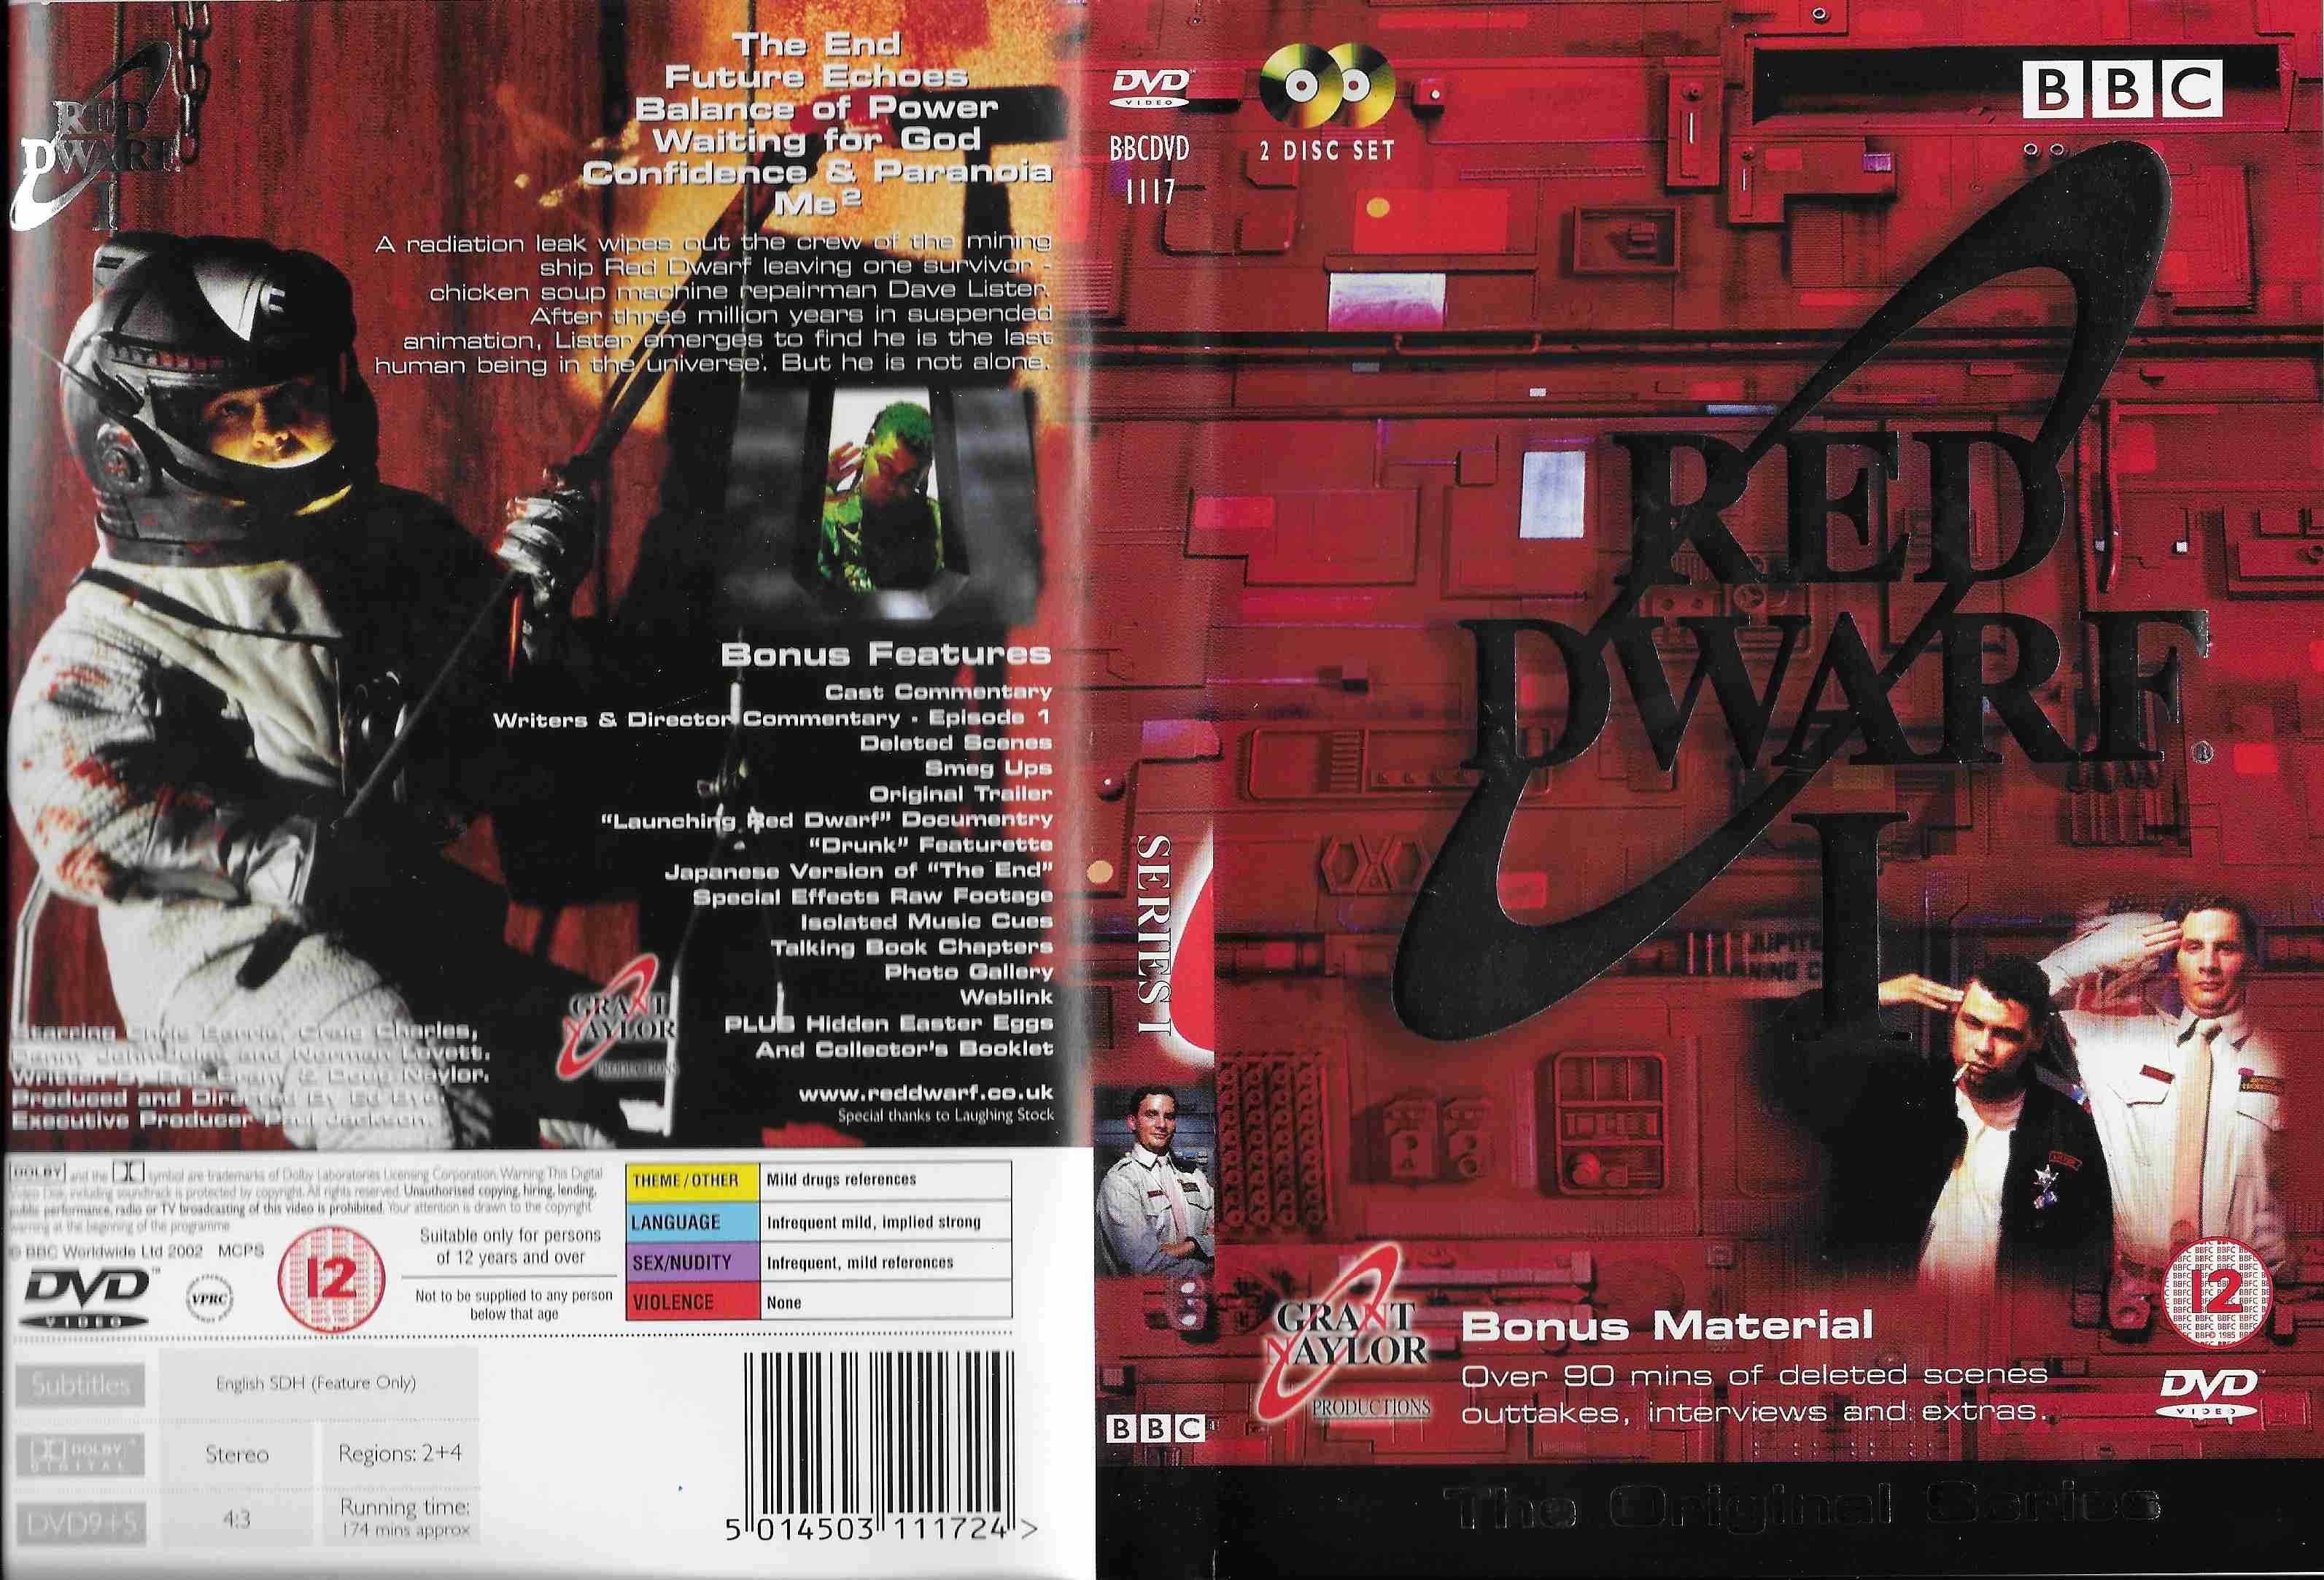 Back cover of BBCDVD 1117